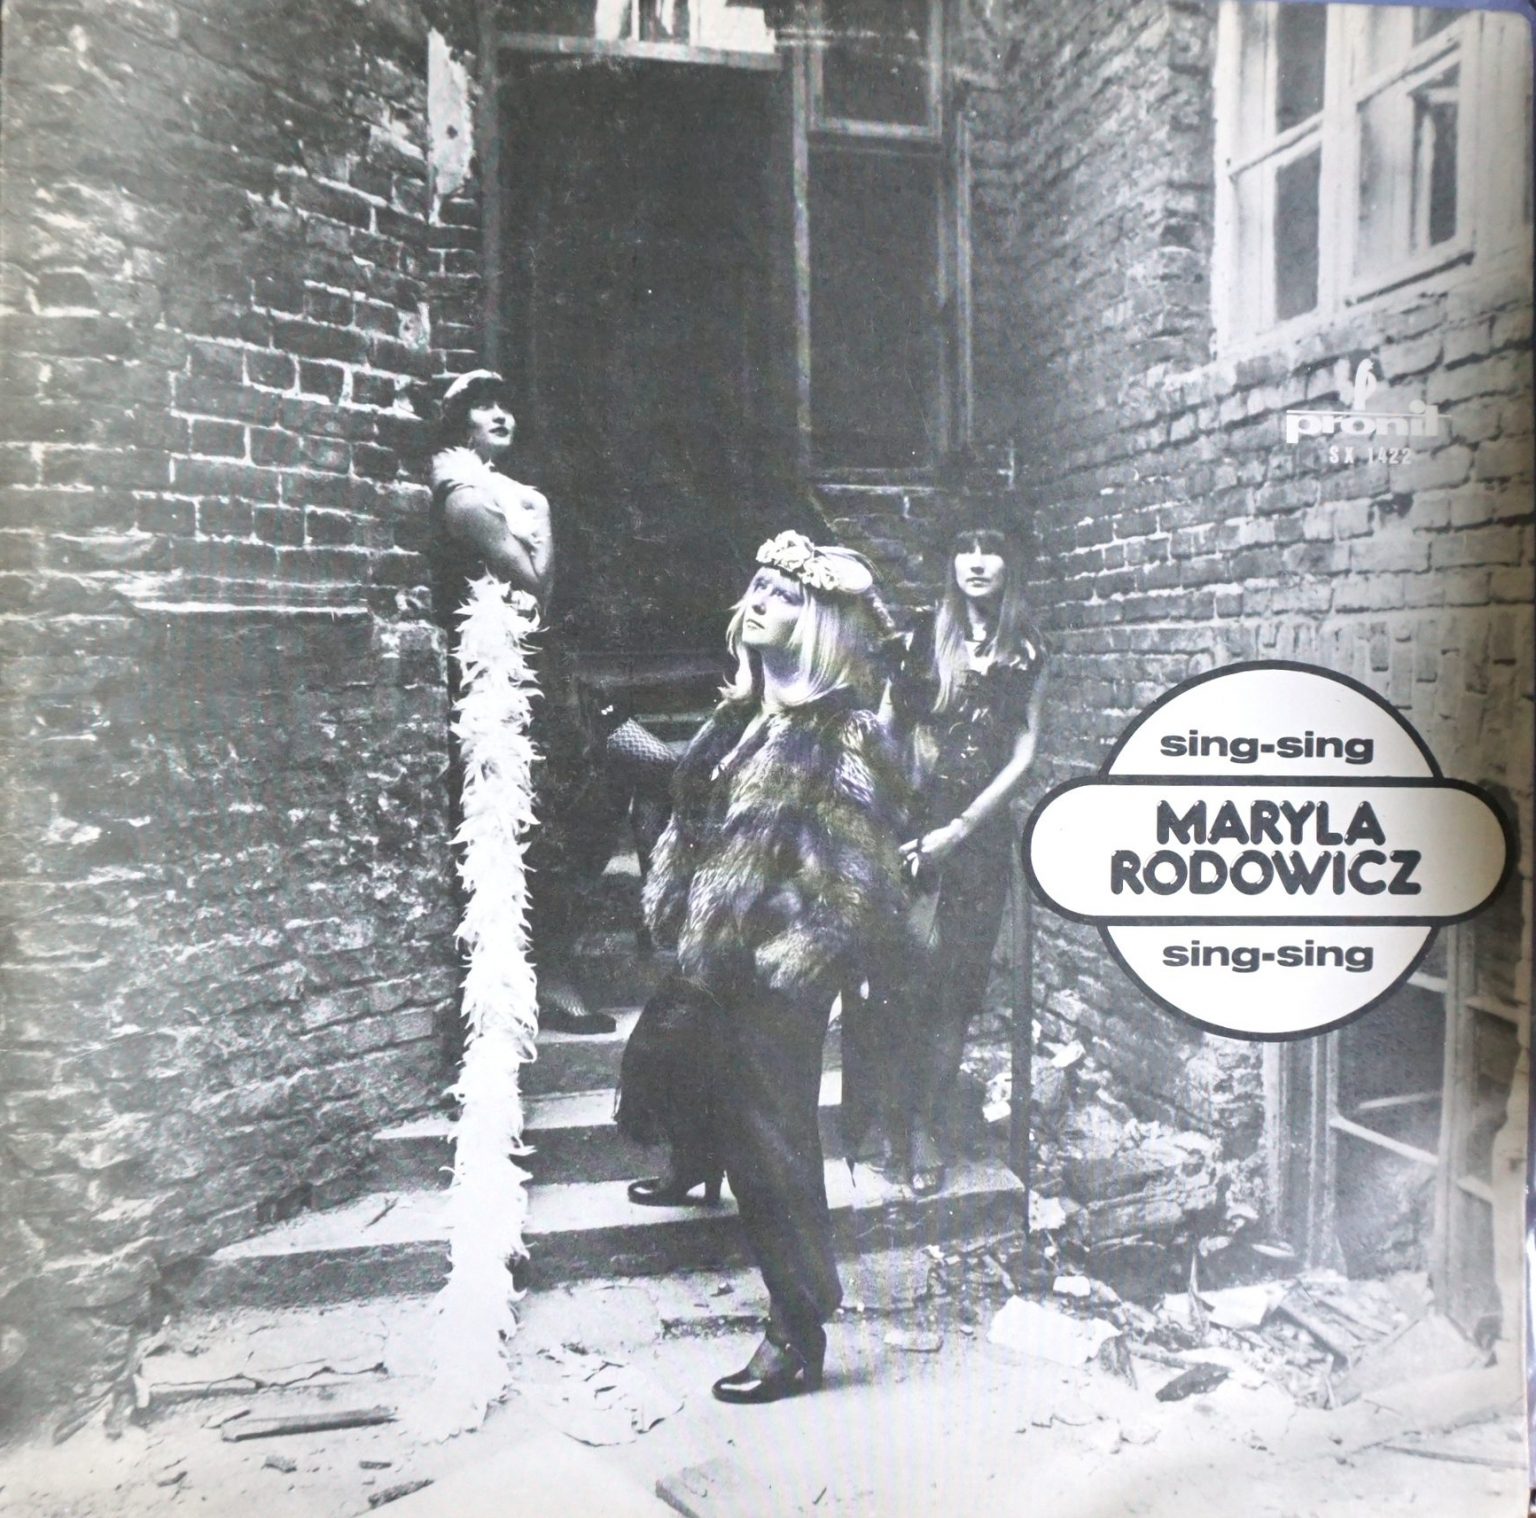 Maryla Rodowicz – Sing-sing [Vinyl LP] (VG/VG)